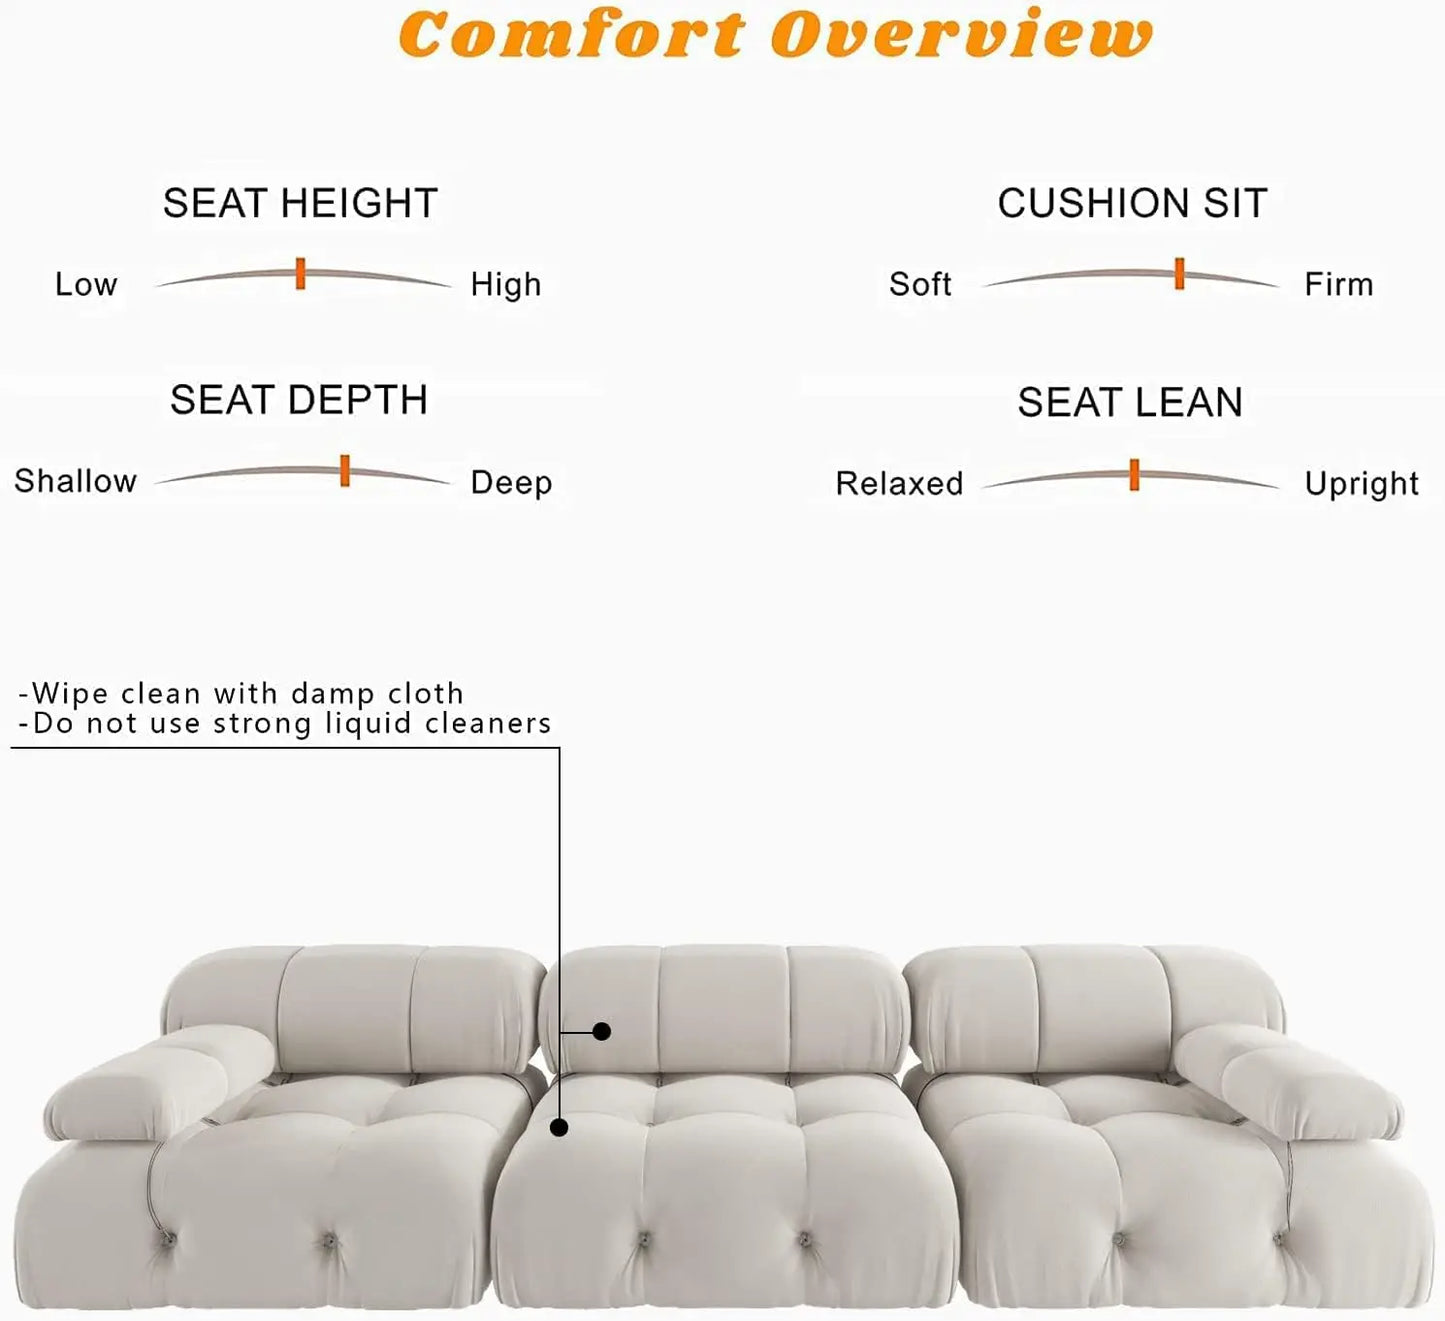 104" Minimalist Modular Sectional Sofa